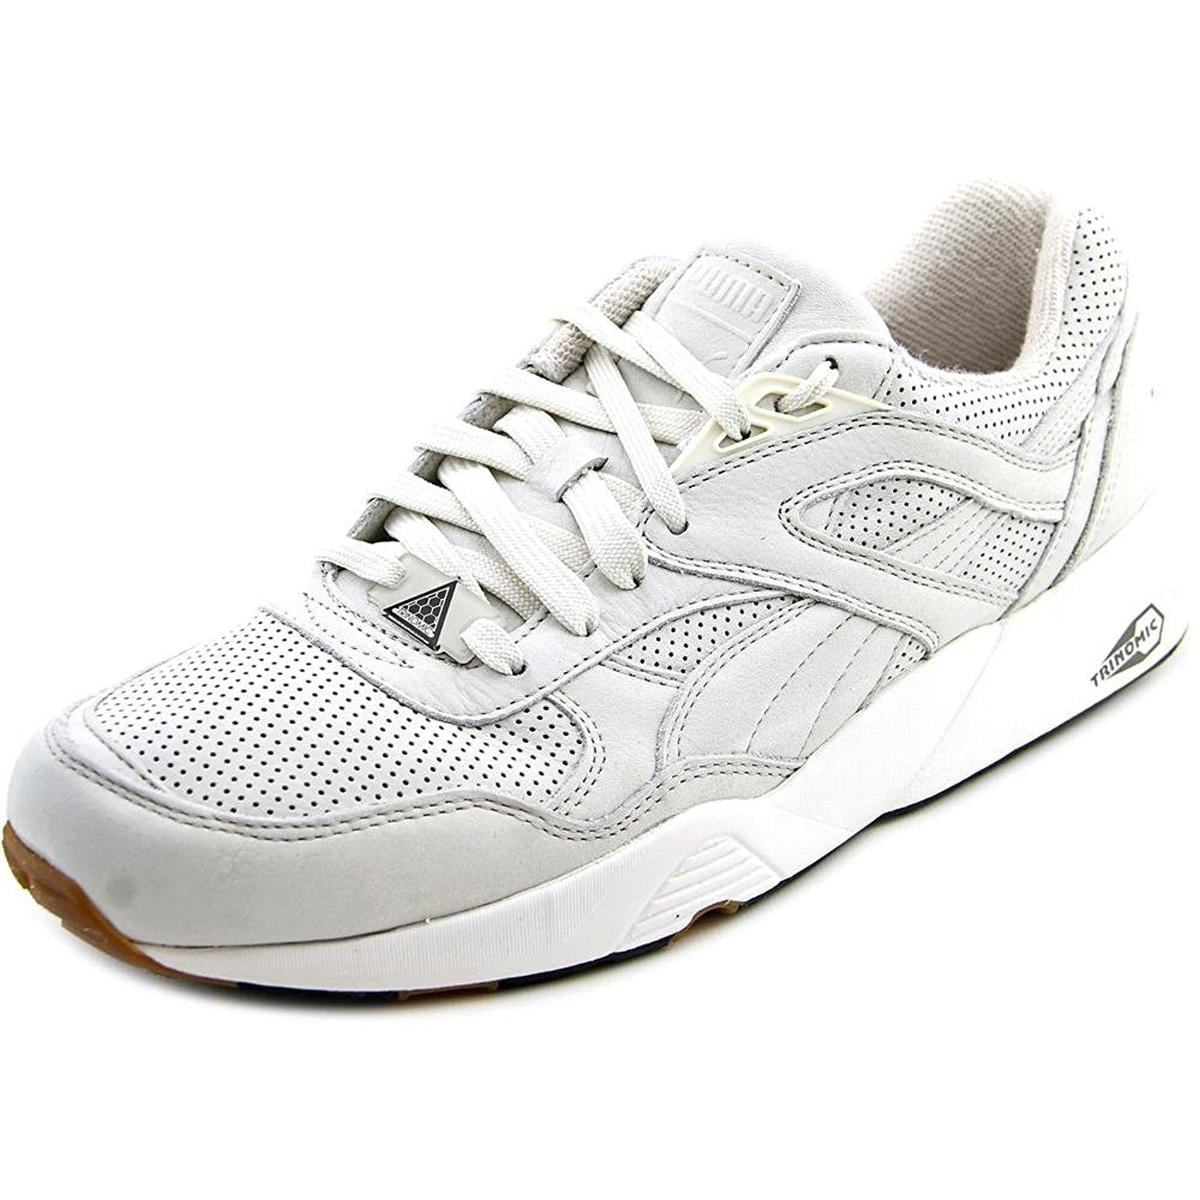 Puma R698 Perf Pack Grey Sneakers - Walmart.com